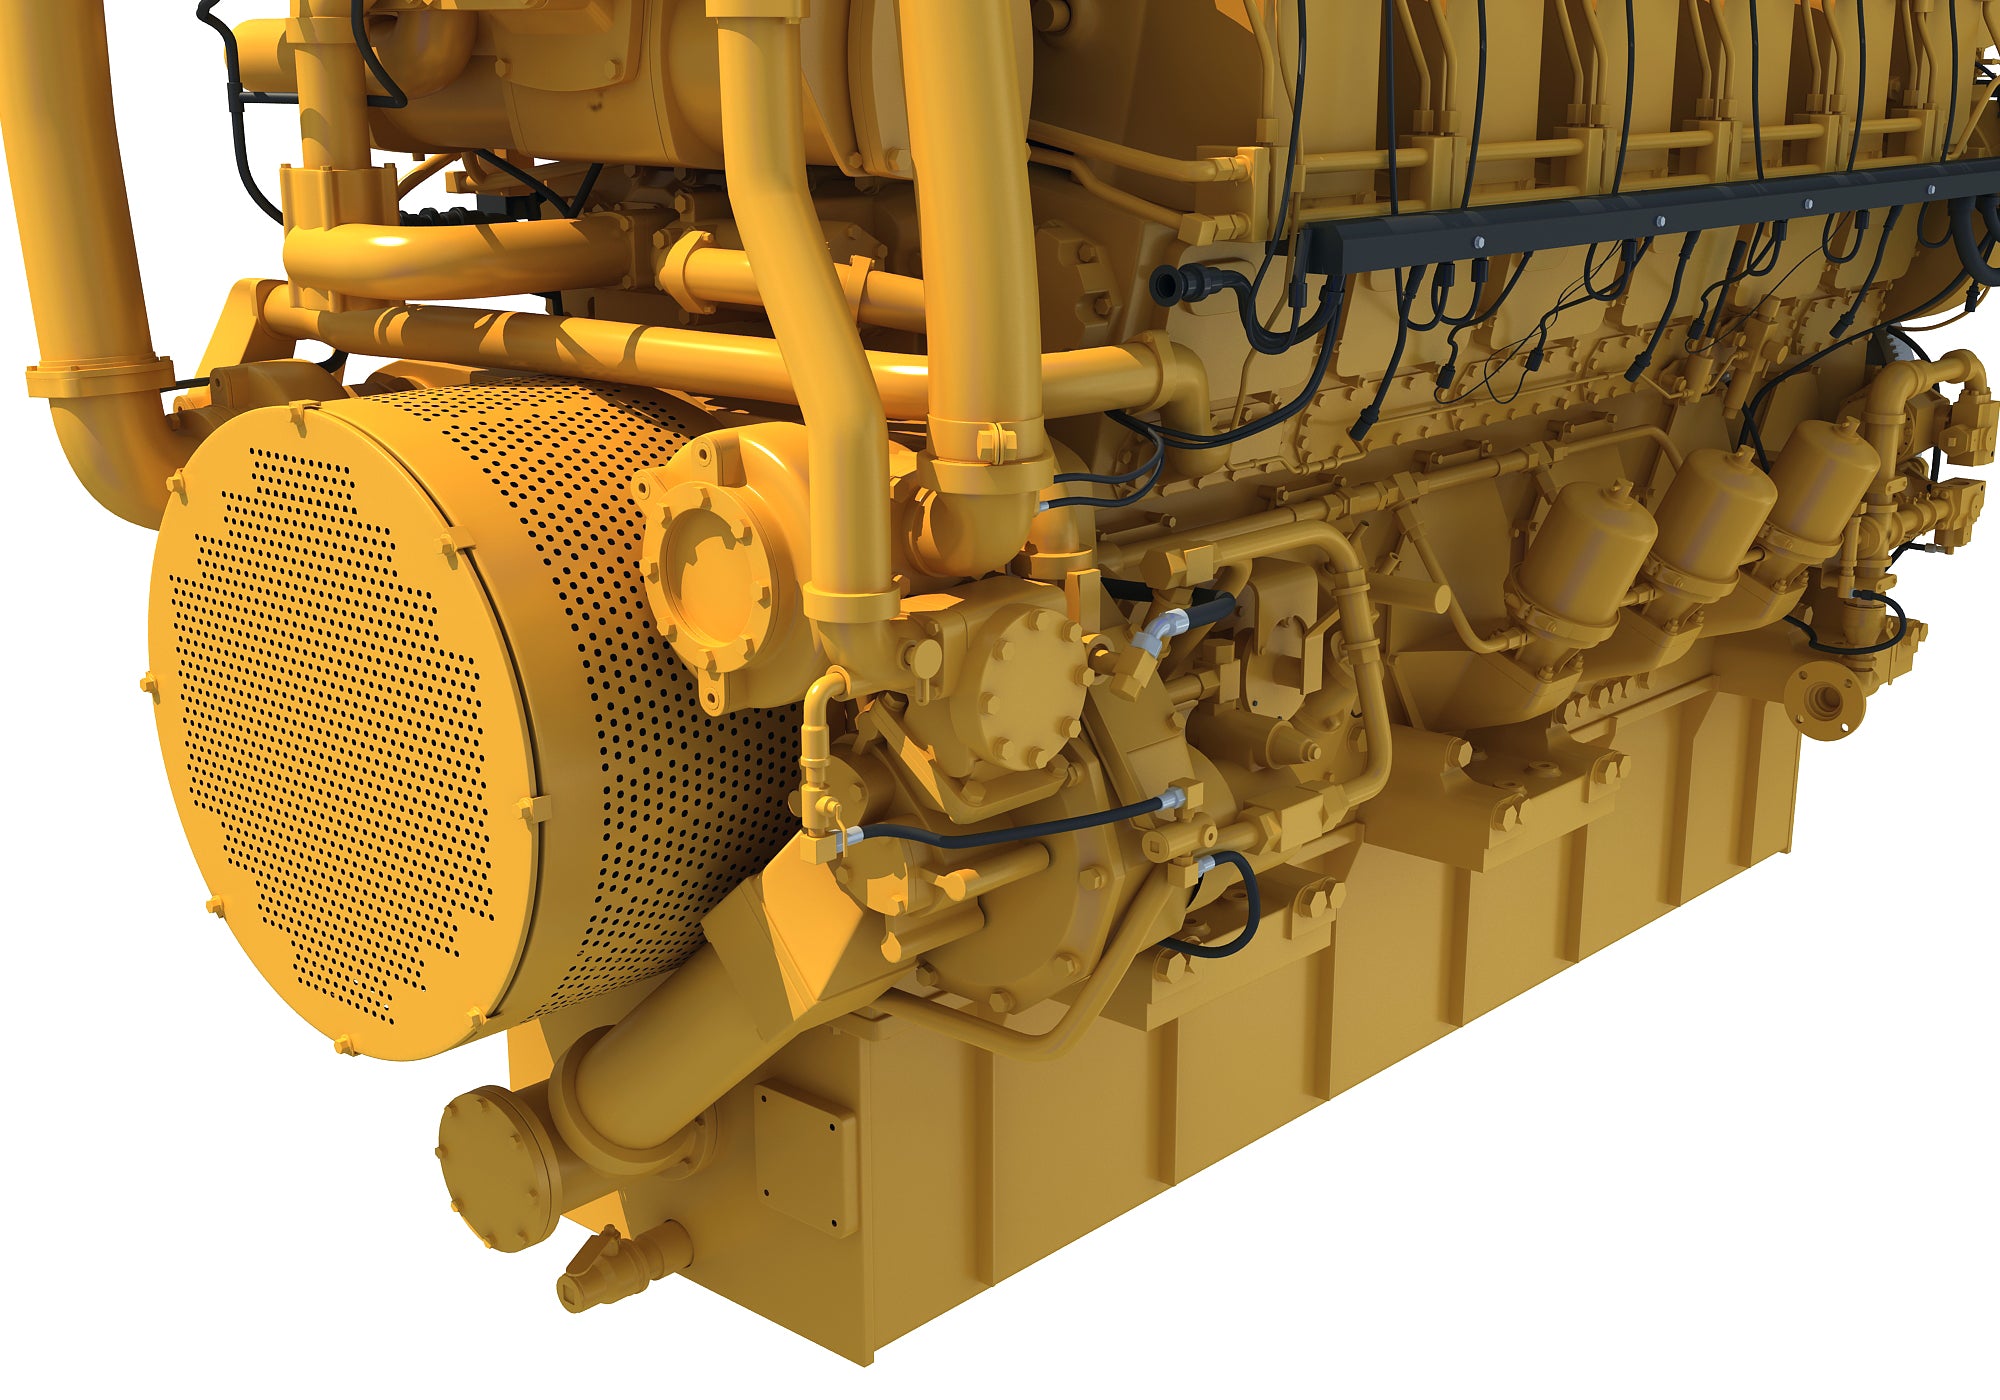 Marine Propulsion Engine 3D Model